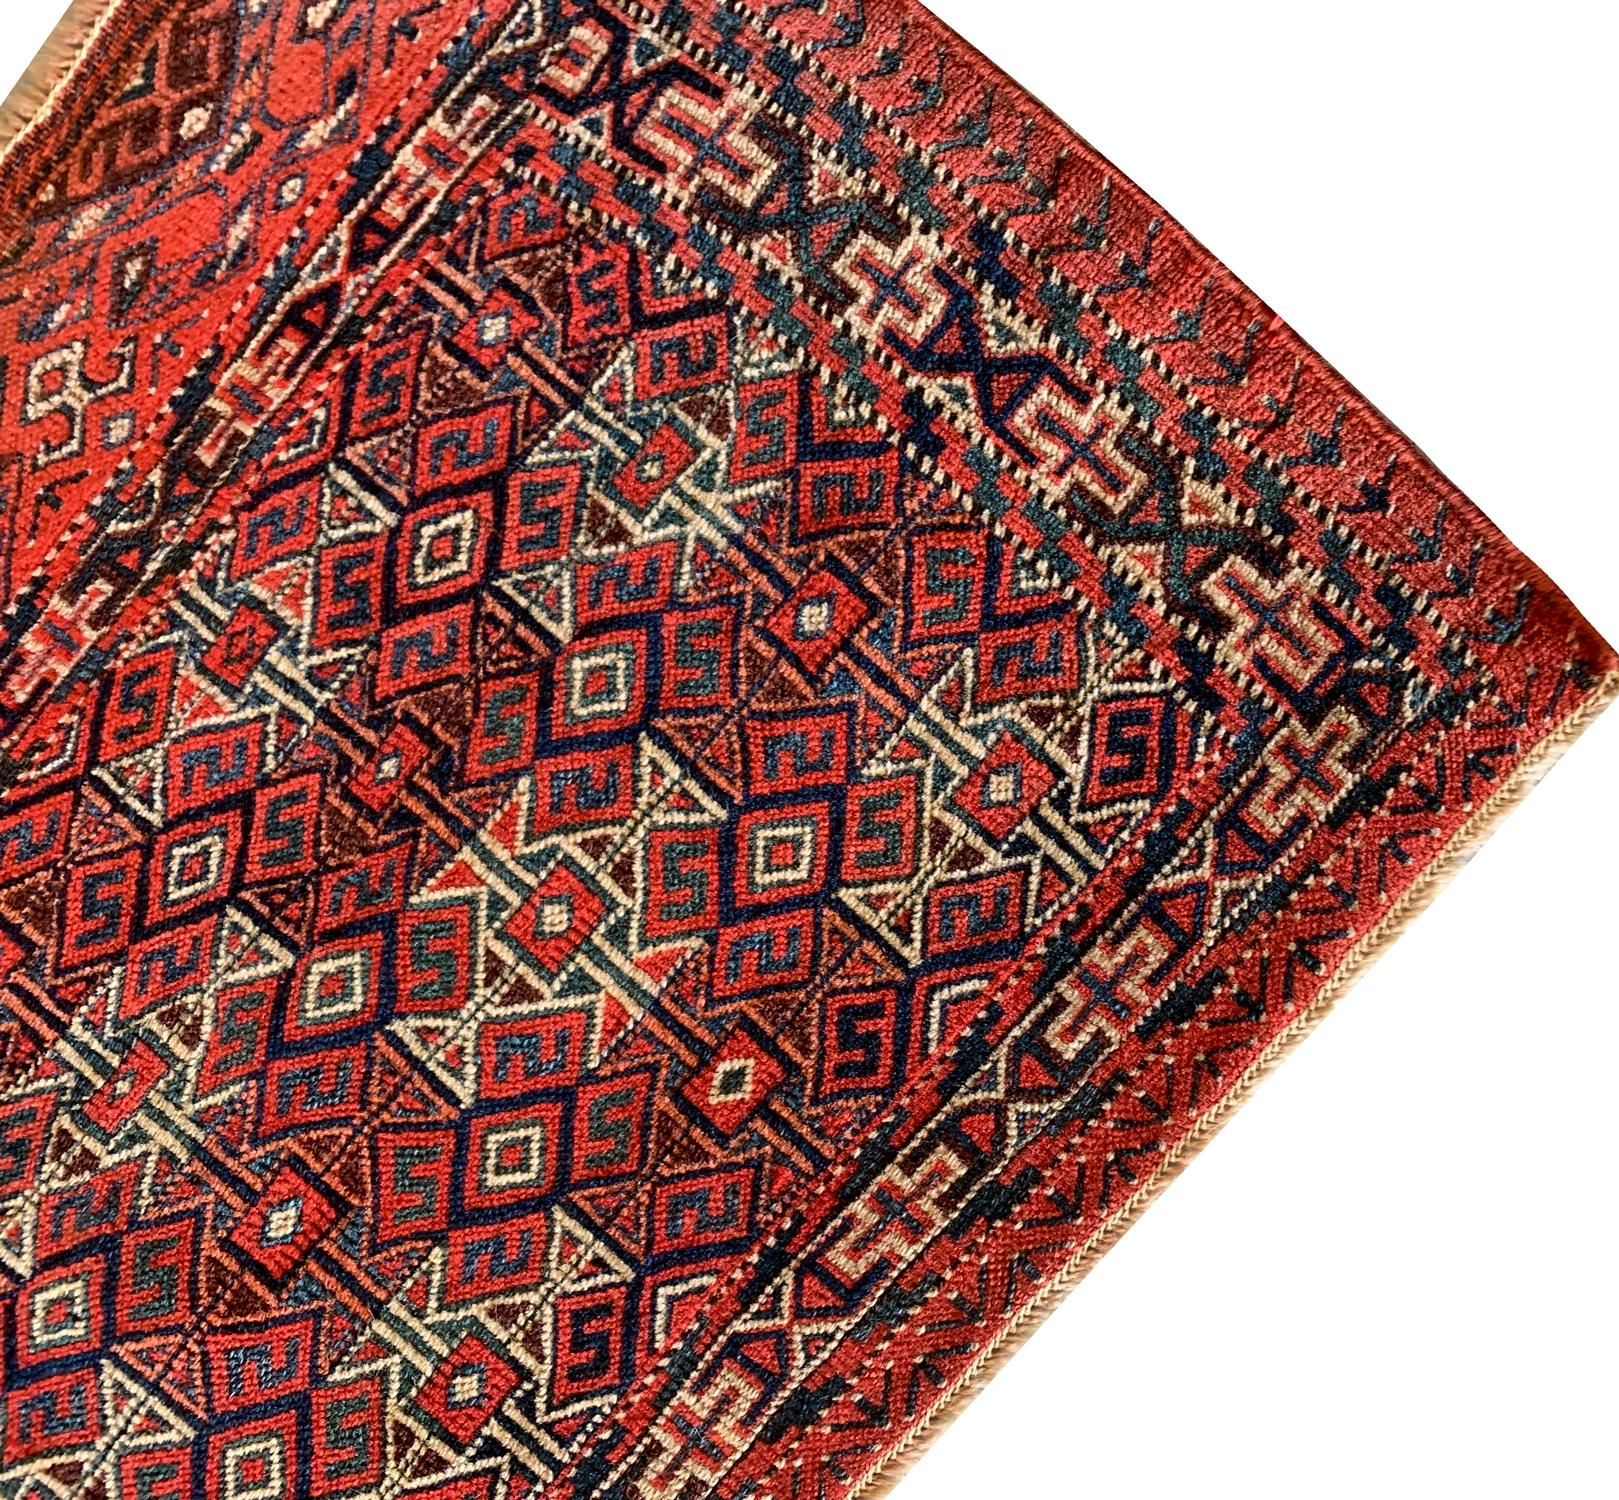 used persian rugs